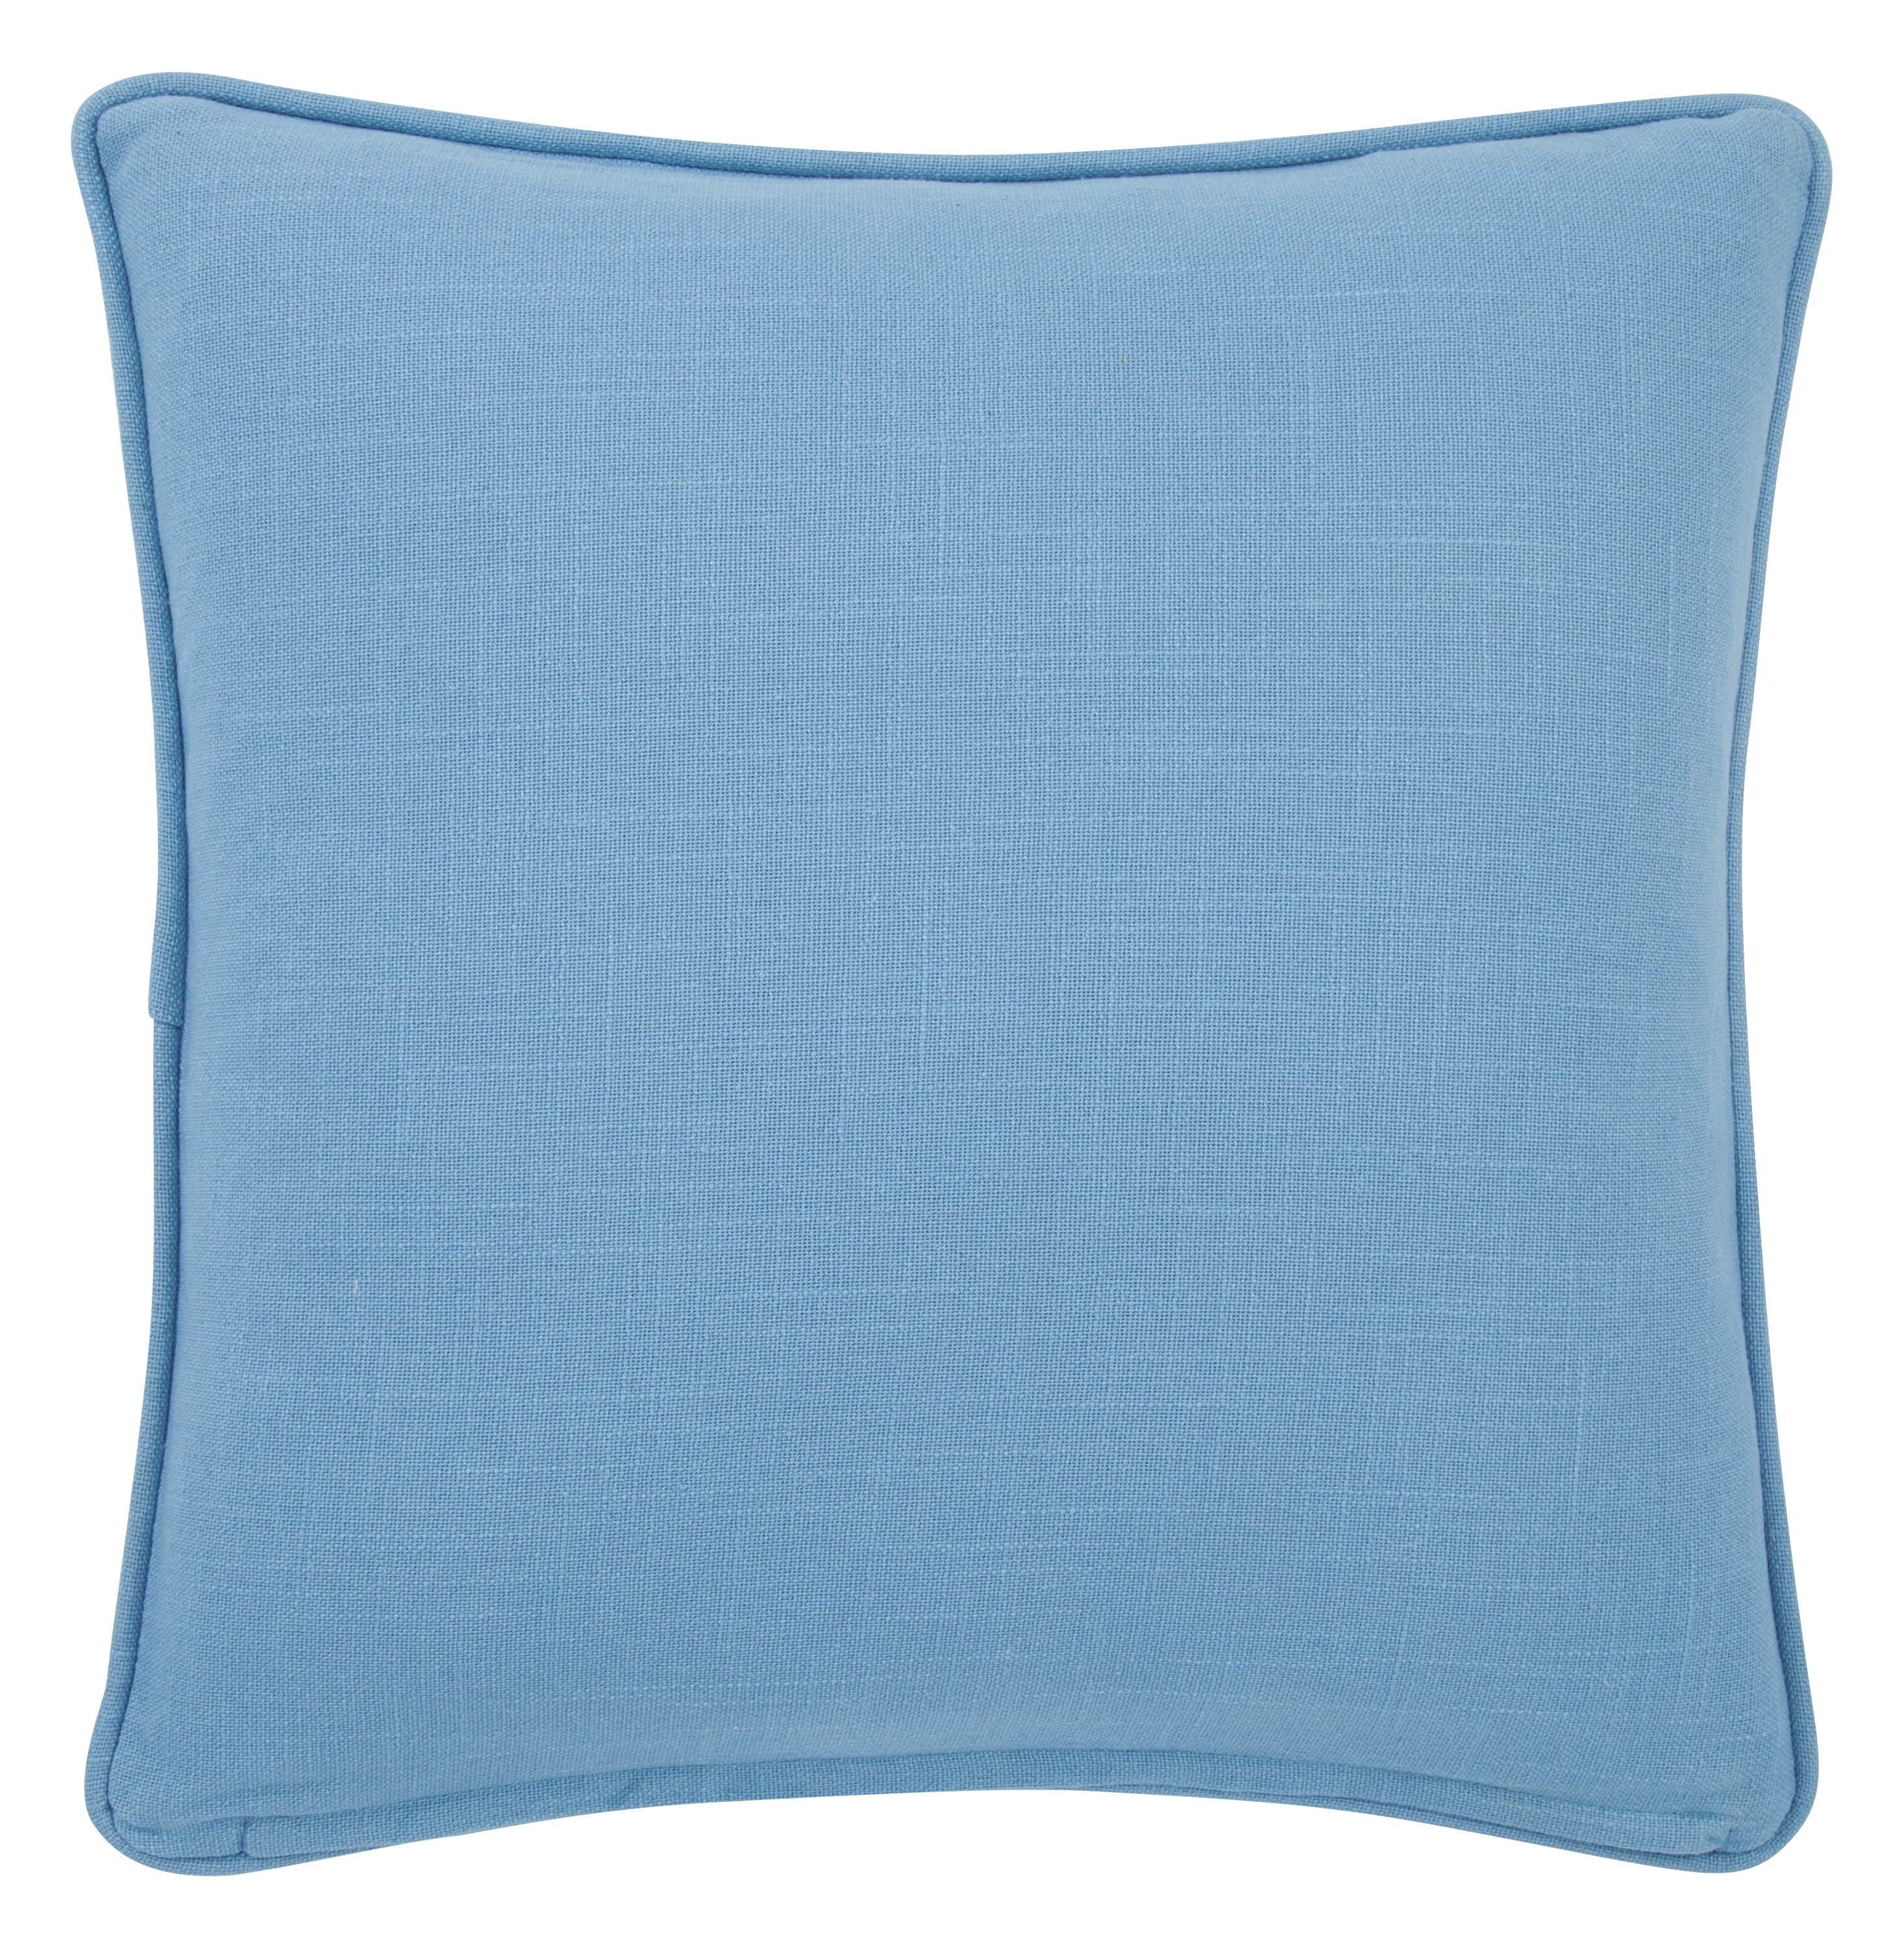 Design (US) Blue 18"X18" Pillow, poly insert - Image 1